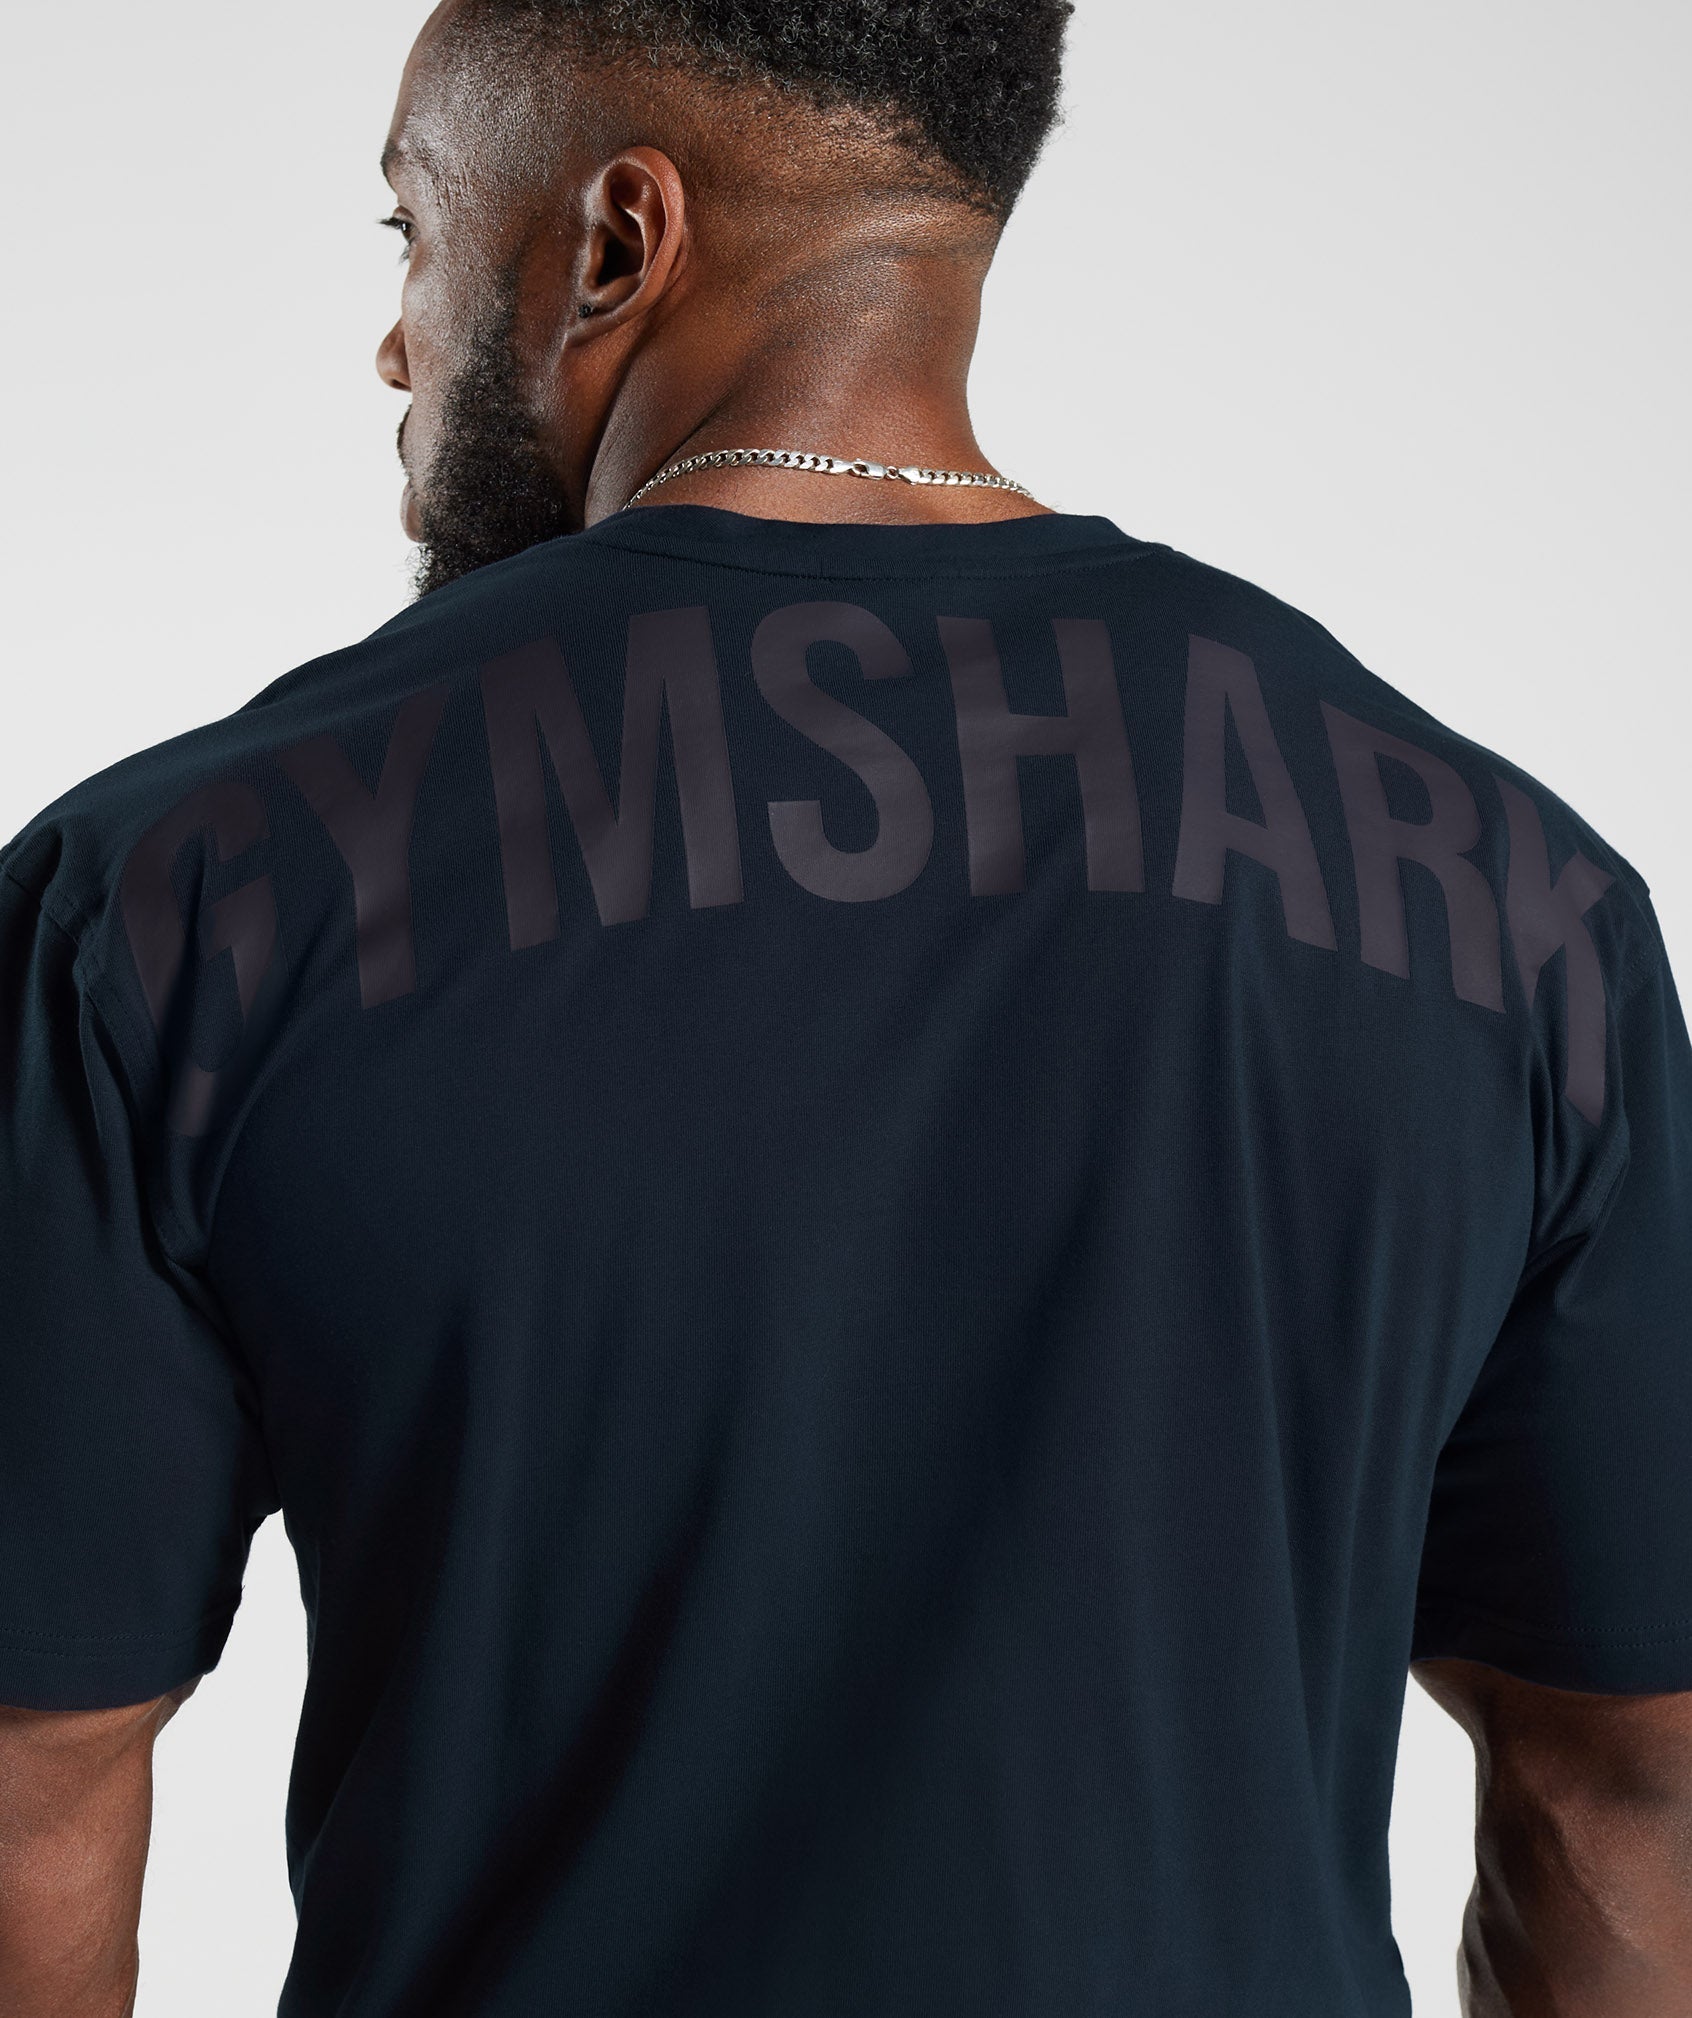 Gymshark Power T-Shirt - Navy